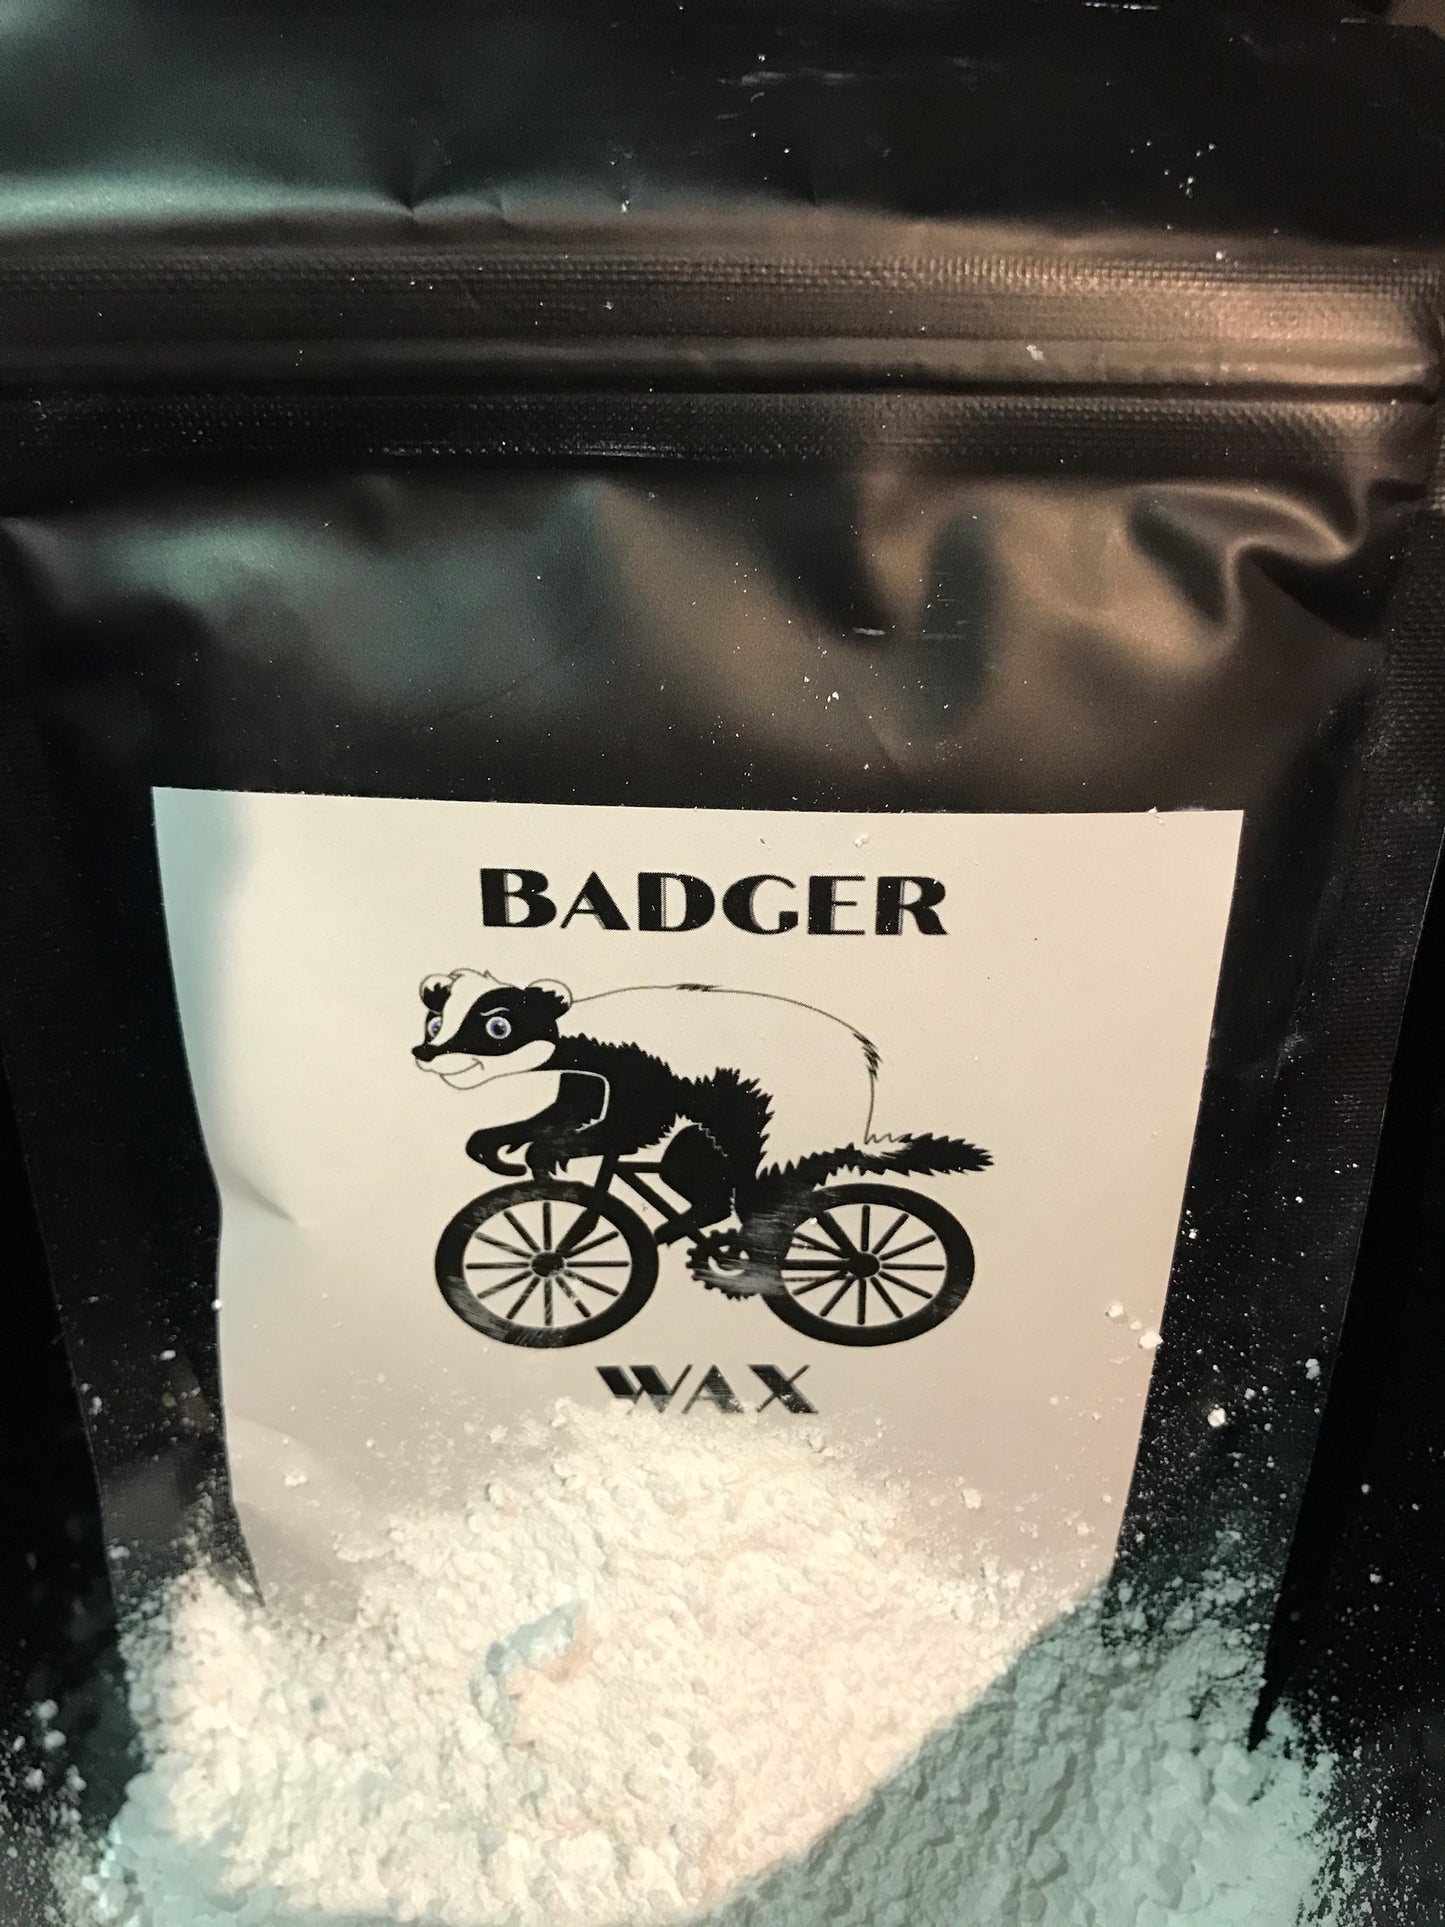 Ultra fine PTFE/Teflon powder 1.6 micron, 50g bag - Badger Wax